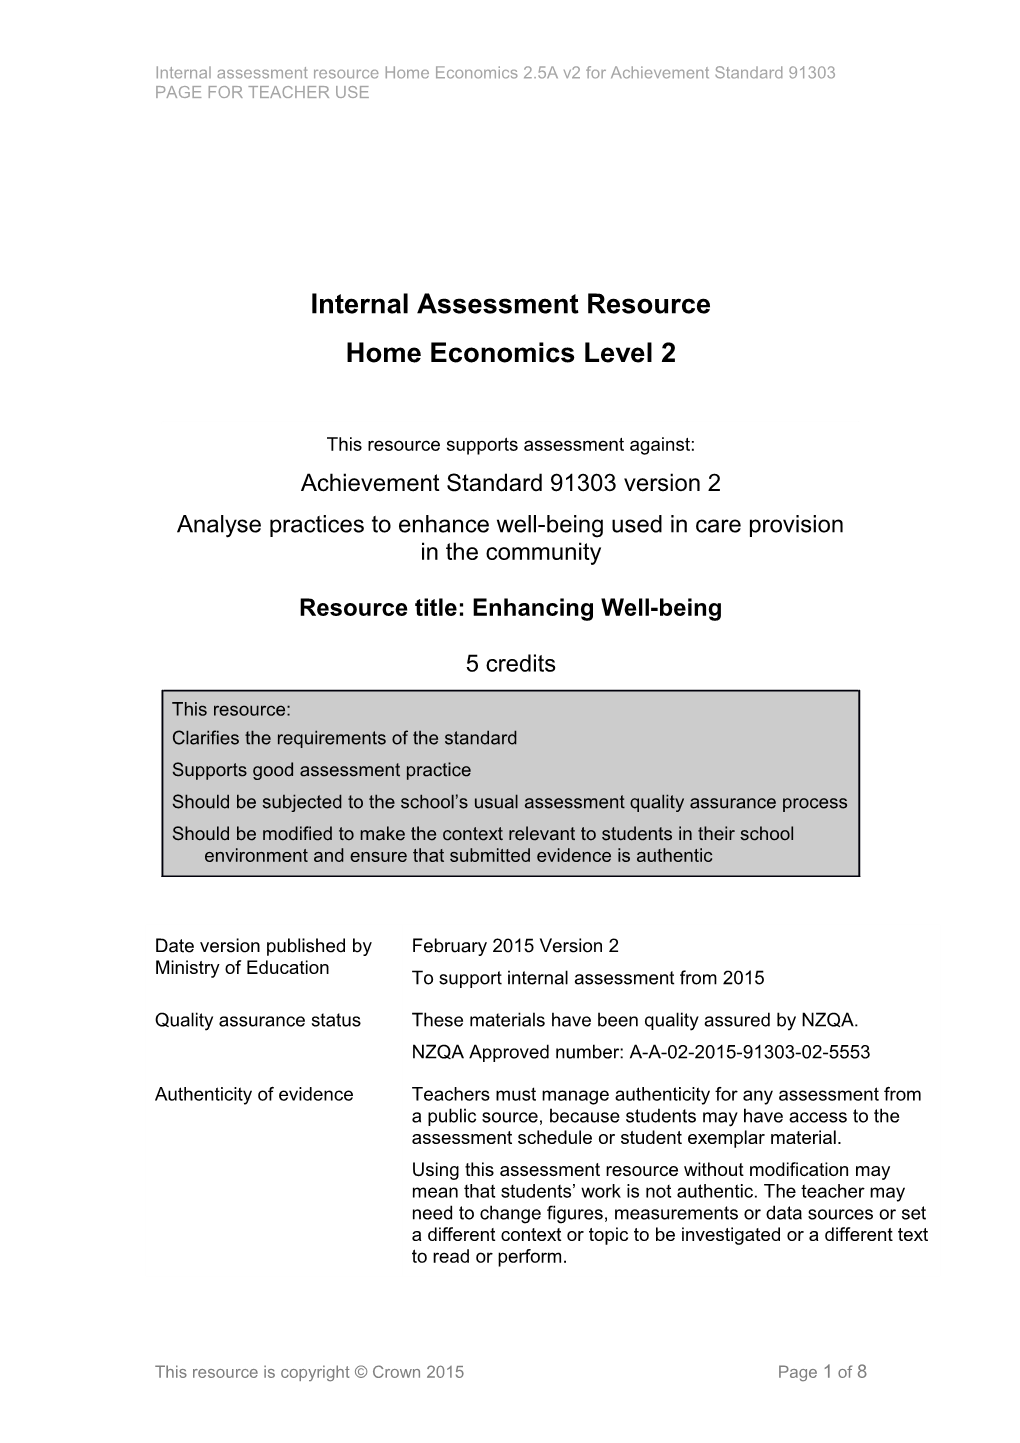 Level 2 Home Economics Internal Assessment Resource